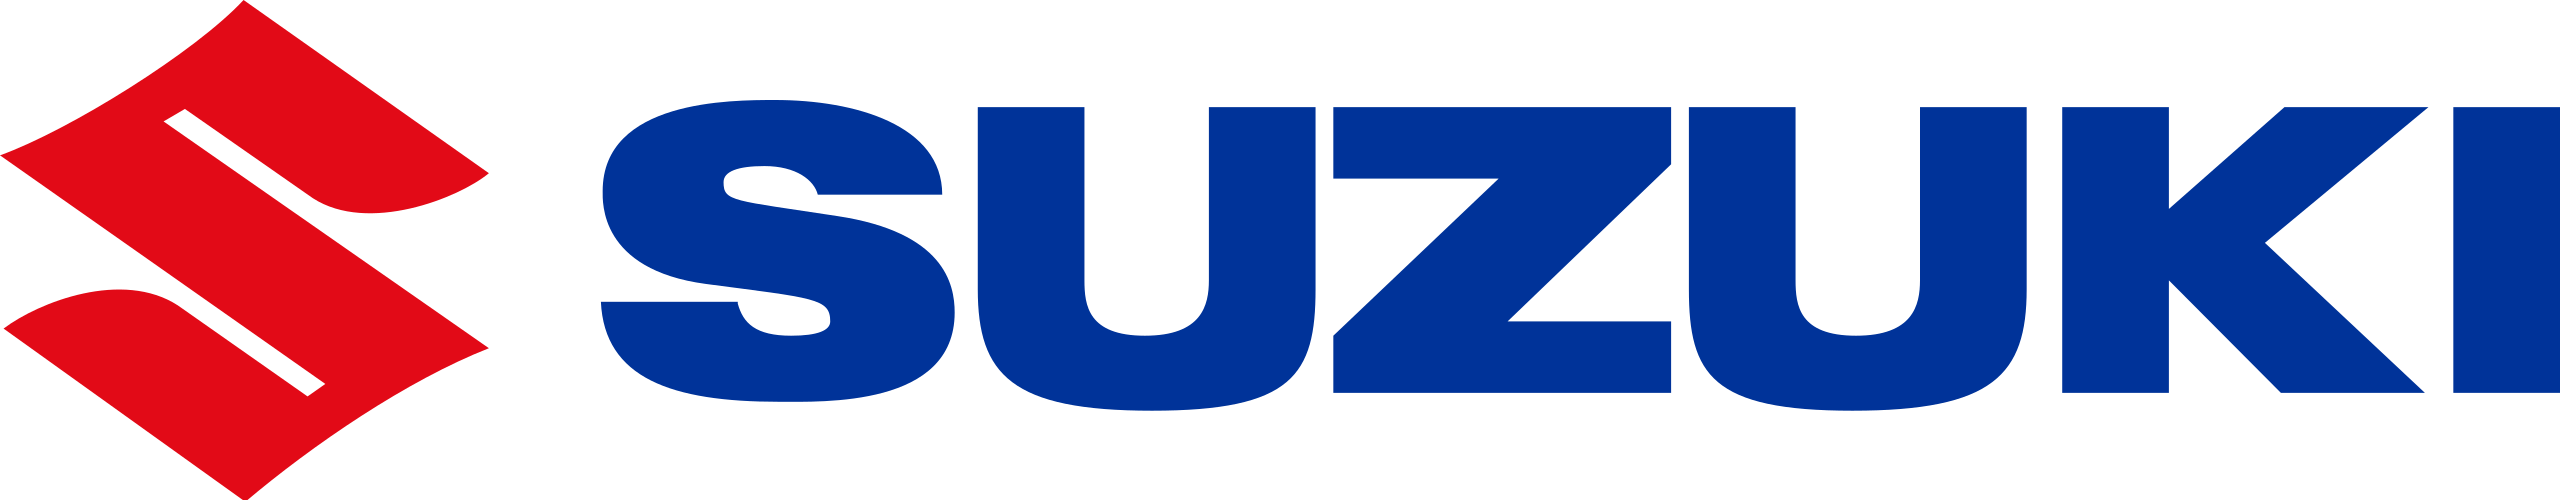 Suzuki Motor Corporation logo svg